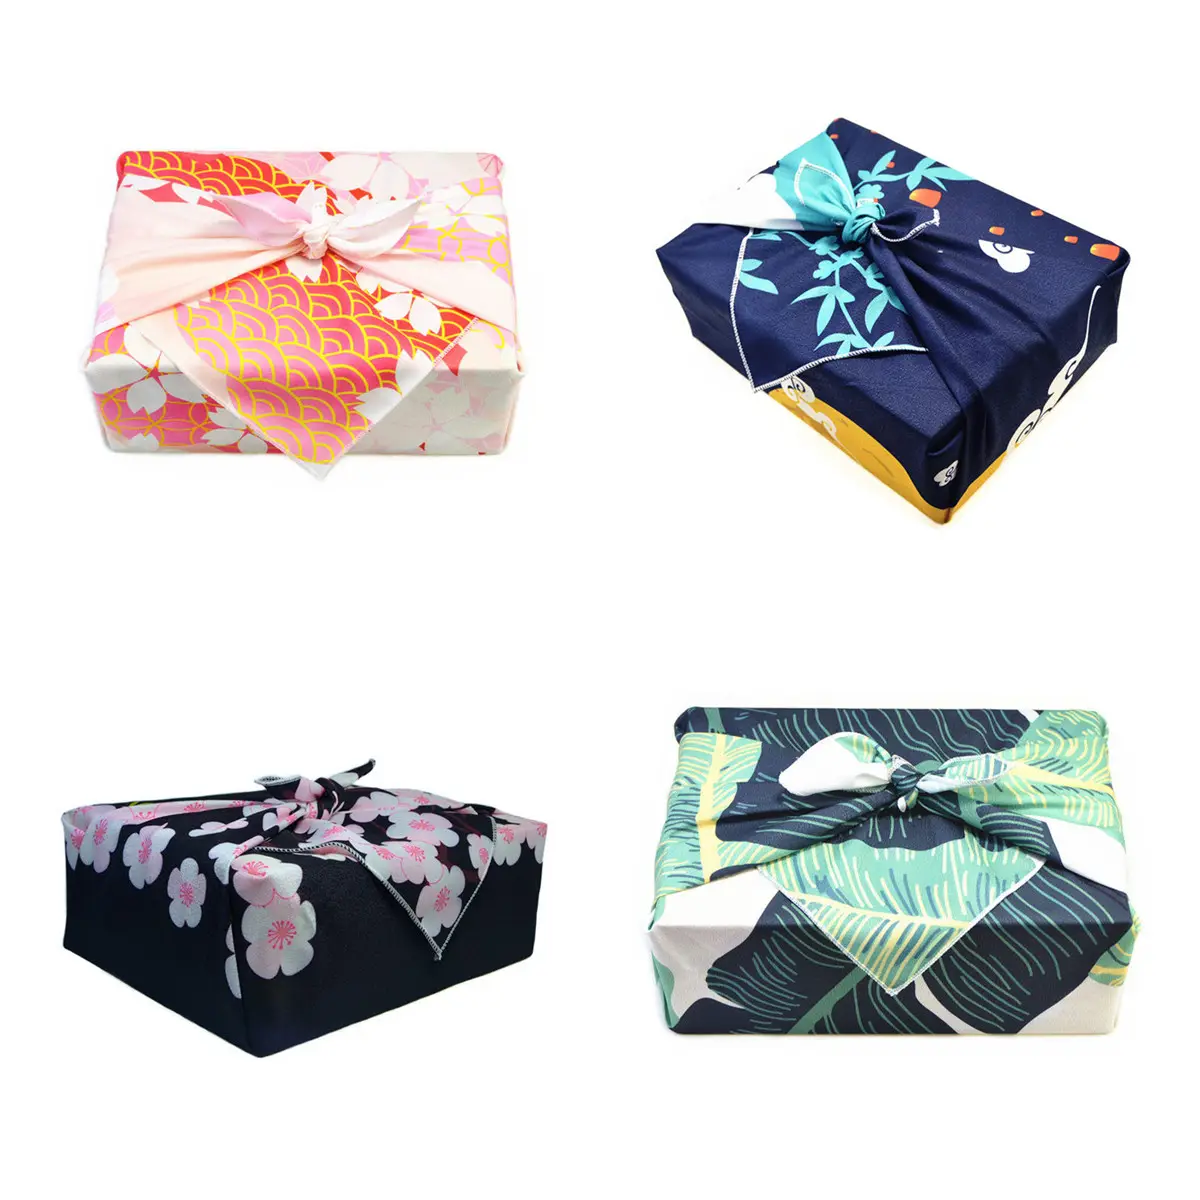 Toptan japon geleneksel Bento kutu ambalaj bezi eko hediye paketi furoshiki